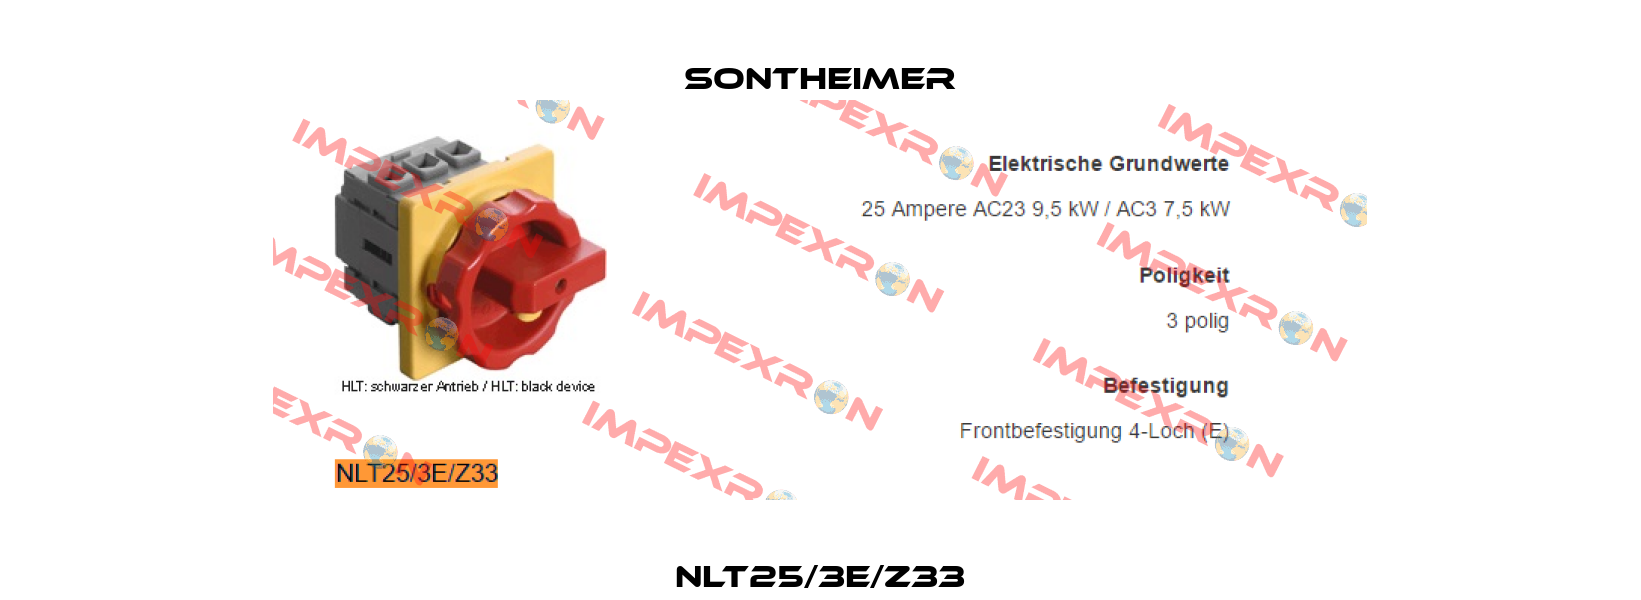 NLT25/3E/Z33 Sontheimer